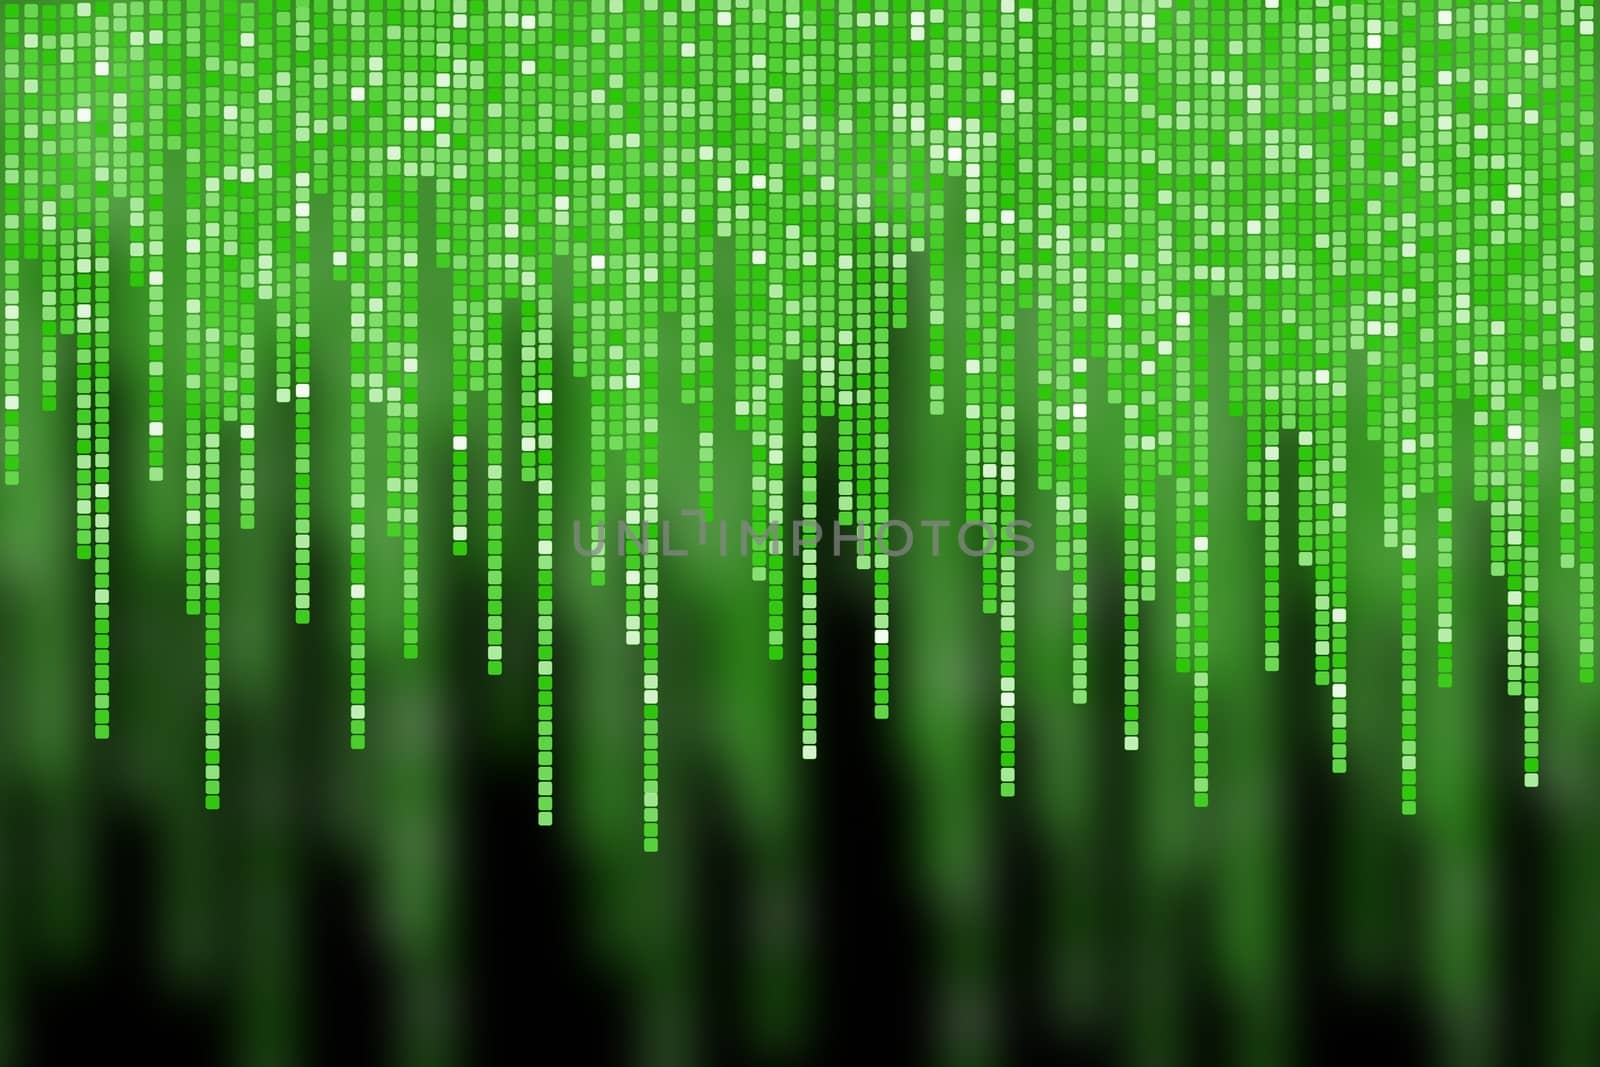 matrix made of green square polkadots on black background.